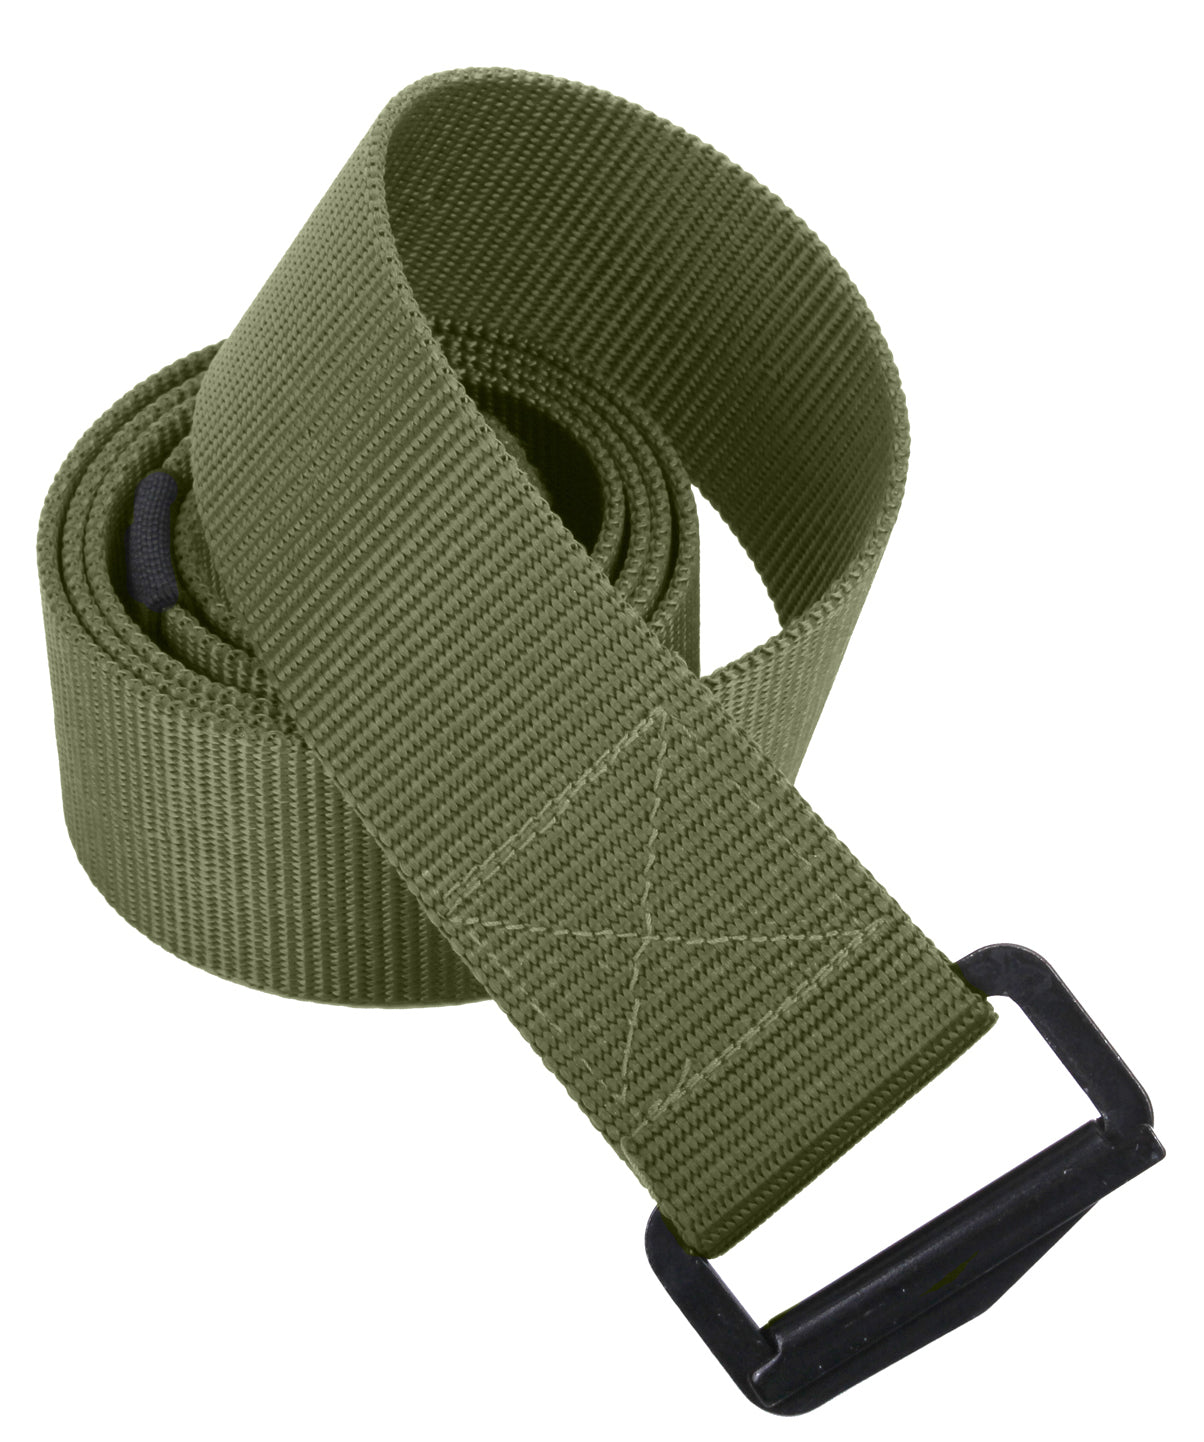 Nylon BDU Uniform Belt - Black, OD, Khaki, Camo 1.75" Wide Adjustable BDU Belts